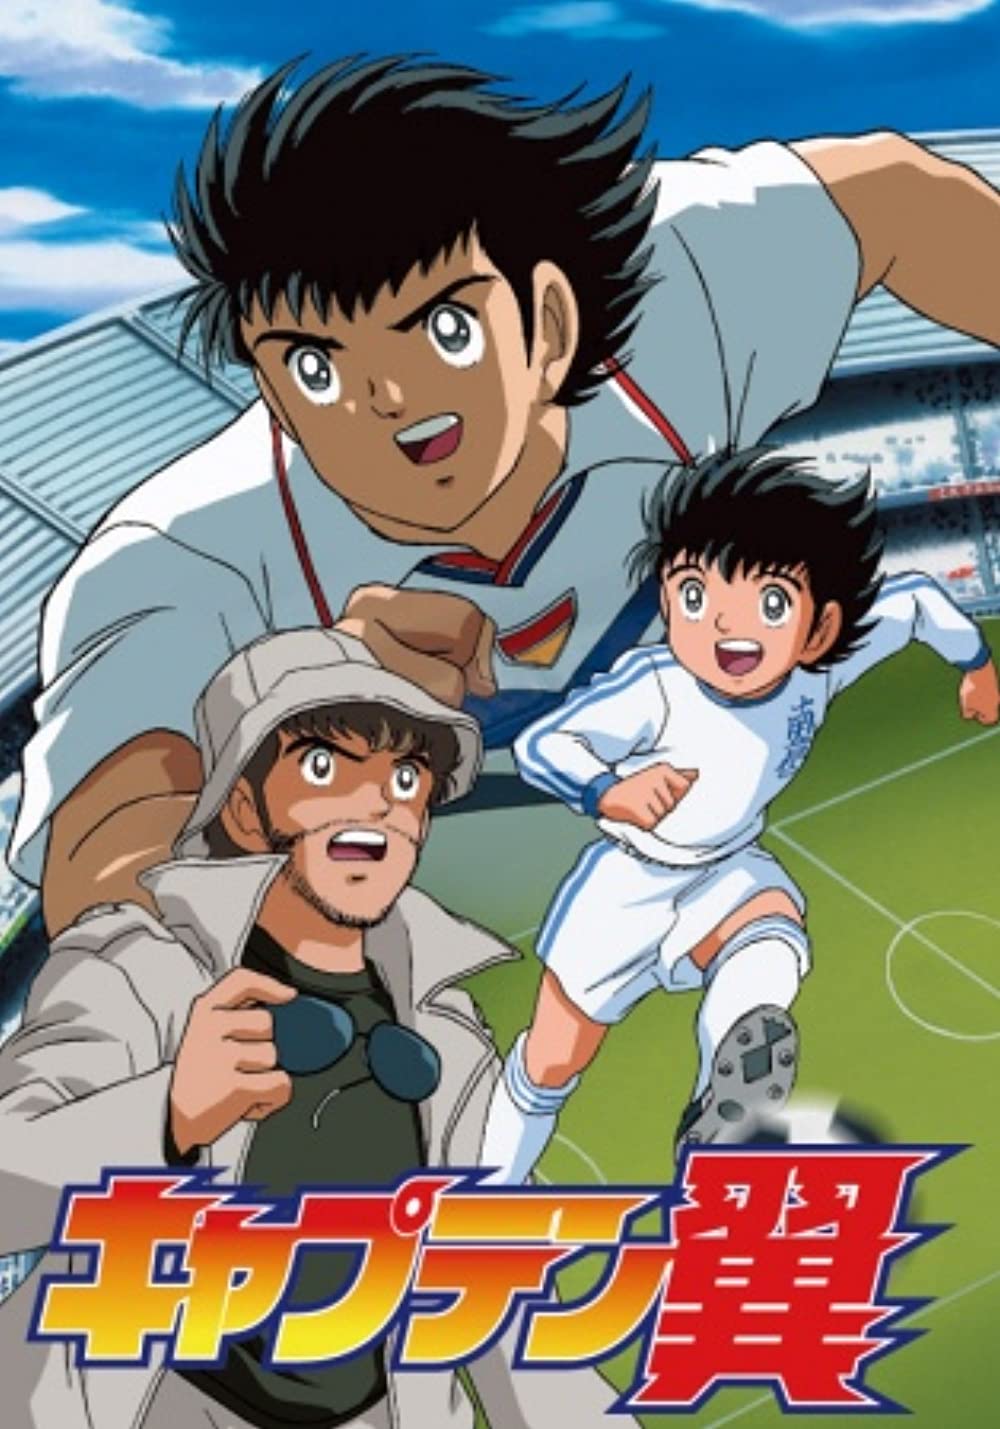 Cover image of Captain Tsubasa: Road to 2002